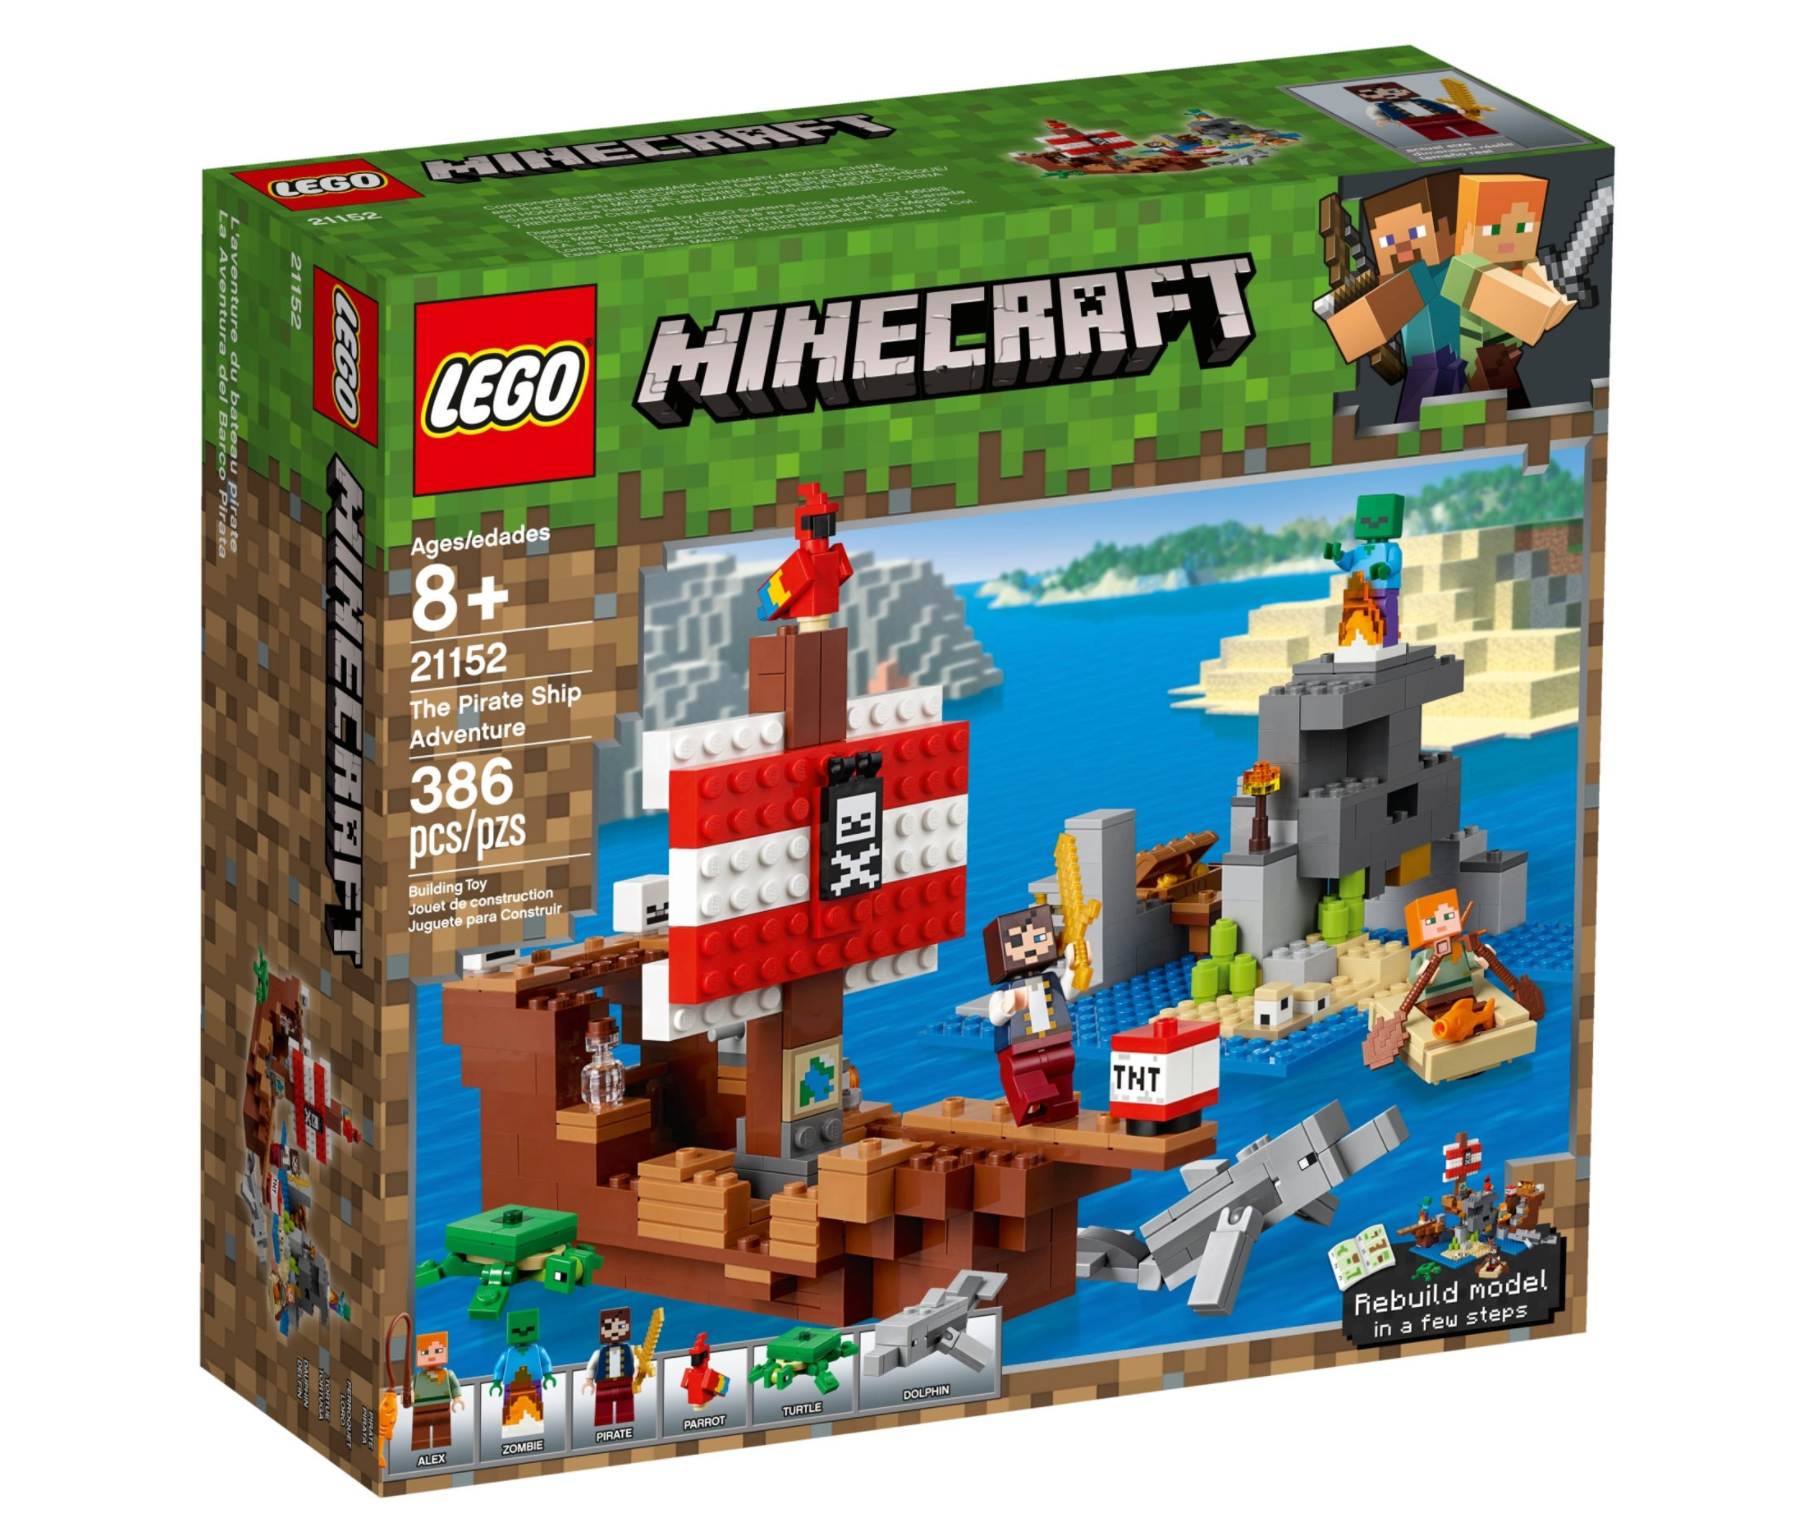 LEGO: Minecraft - The Pirate Ship Adventure